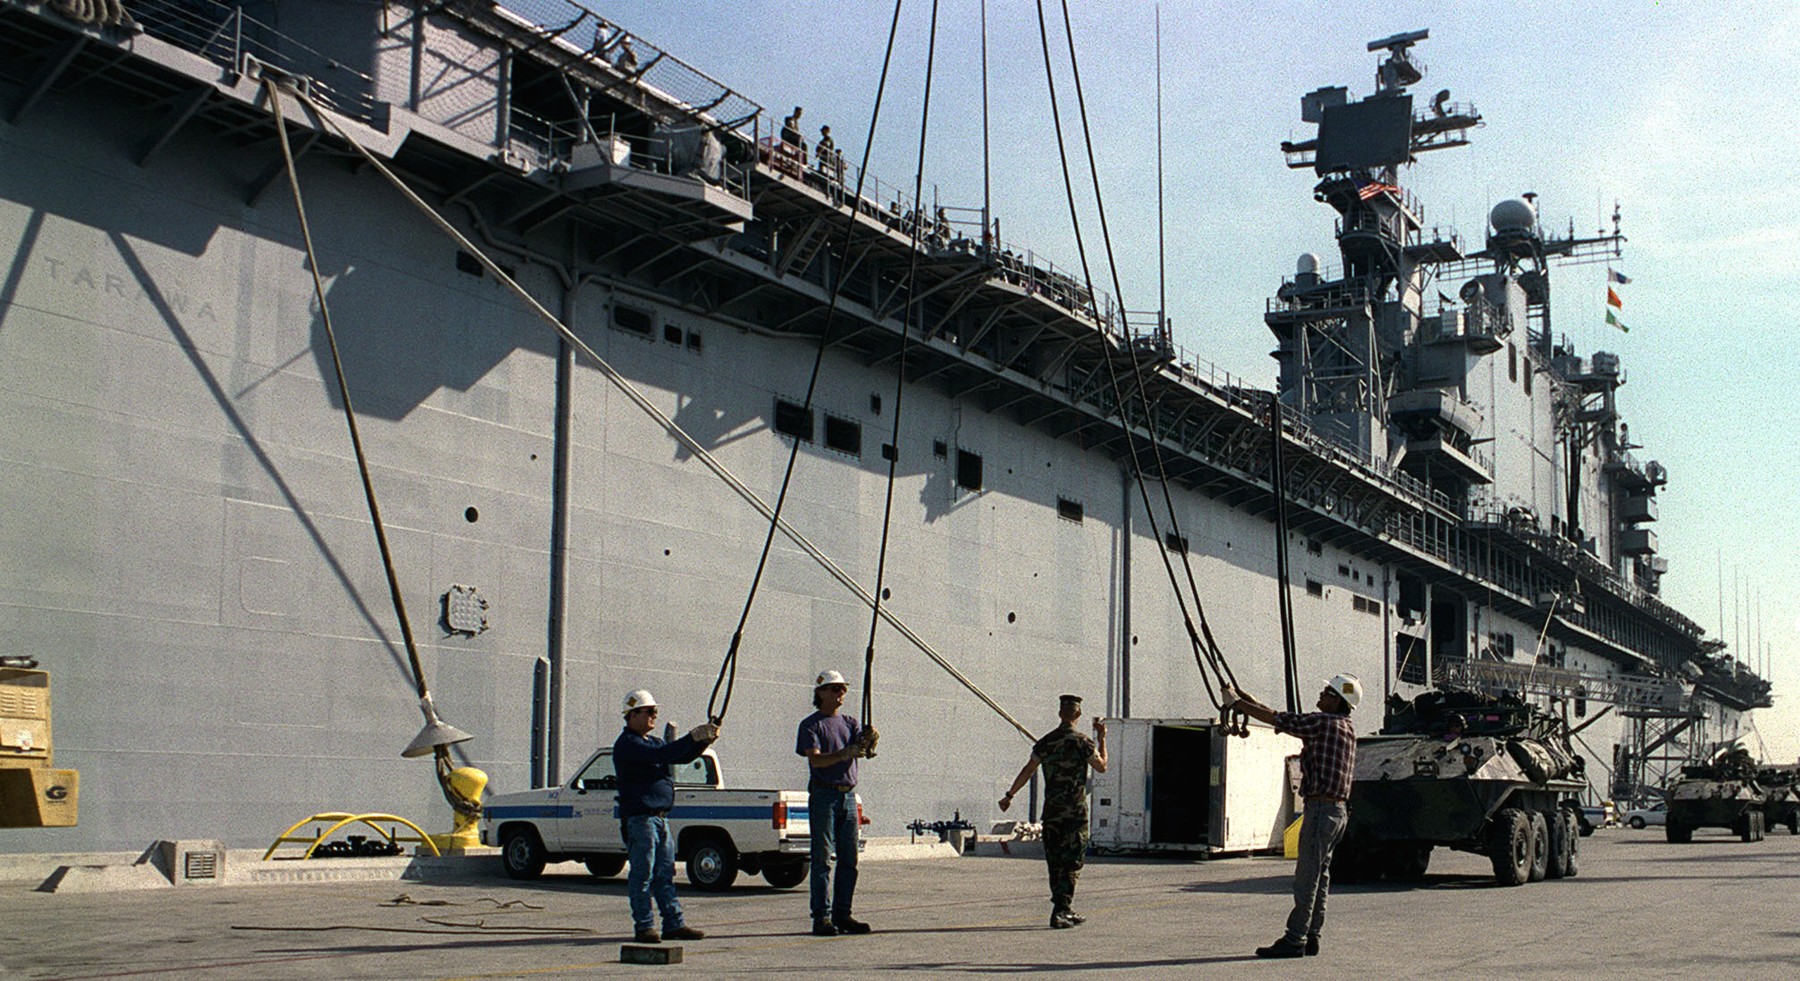 lha-1 uss tarawa amphibious assault ship us navy san diego california 99